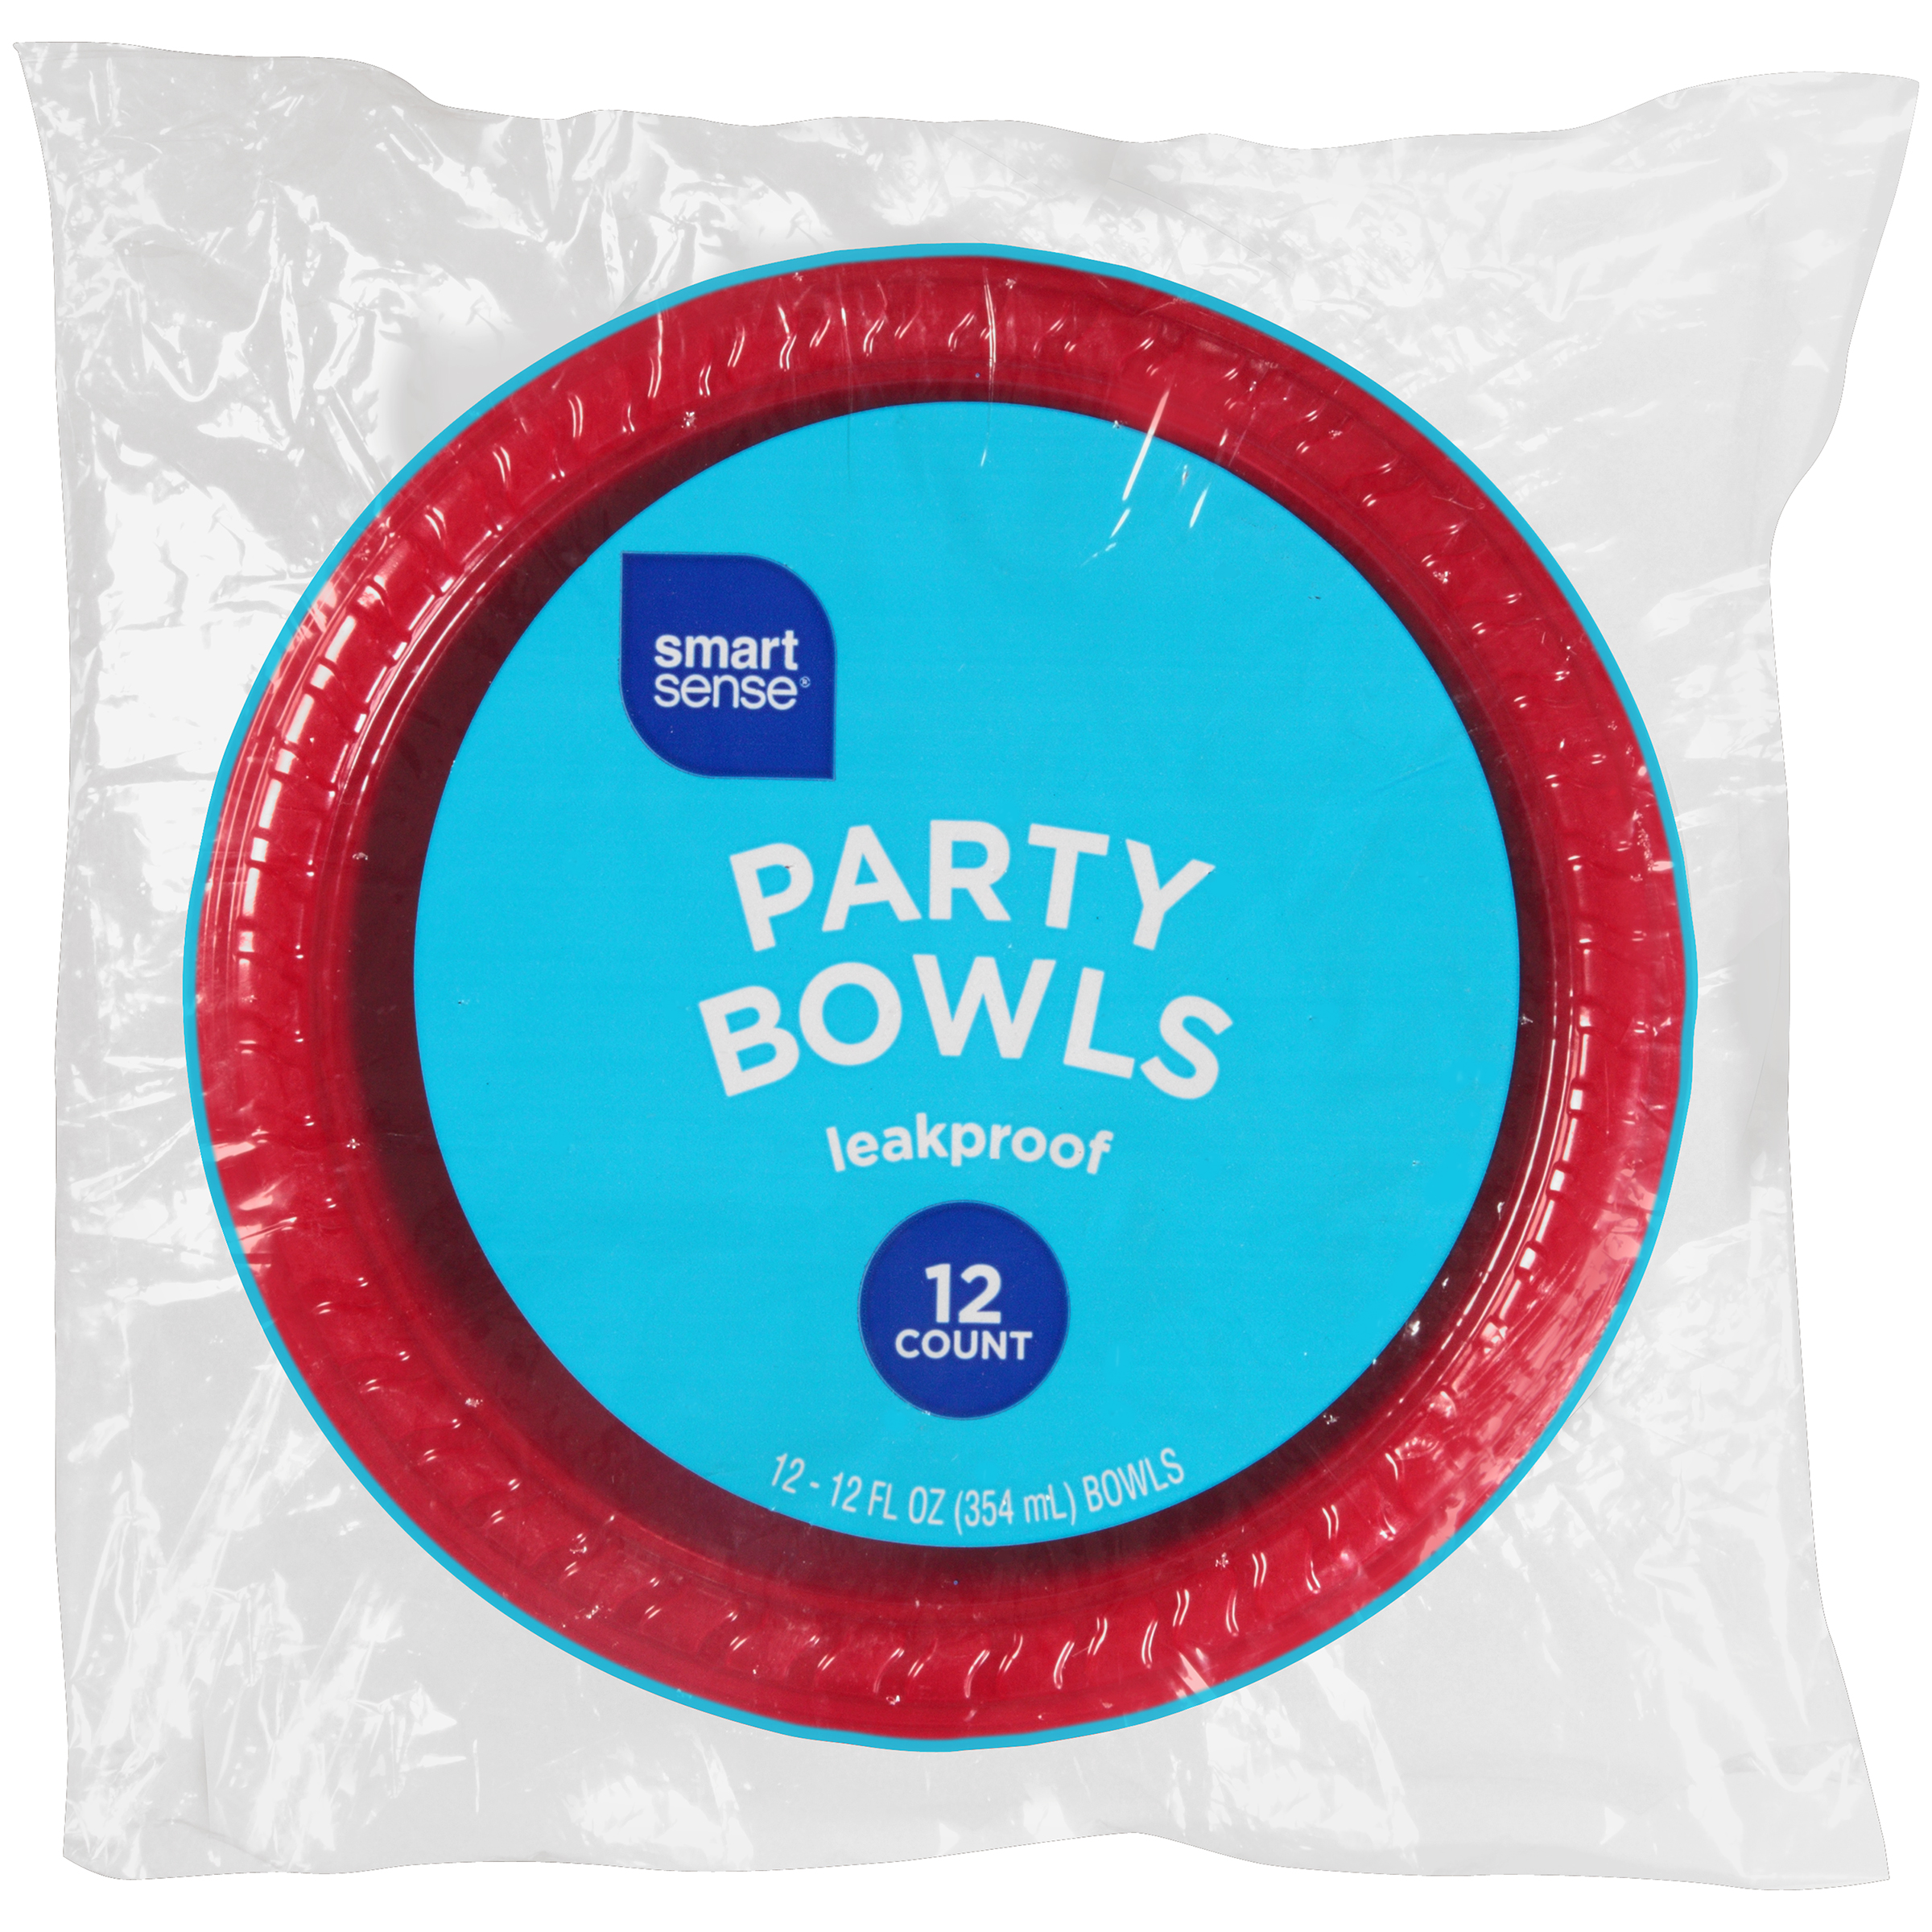 Smart Sense Leakproof Party Bowls 12 CT Pack